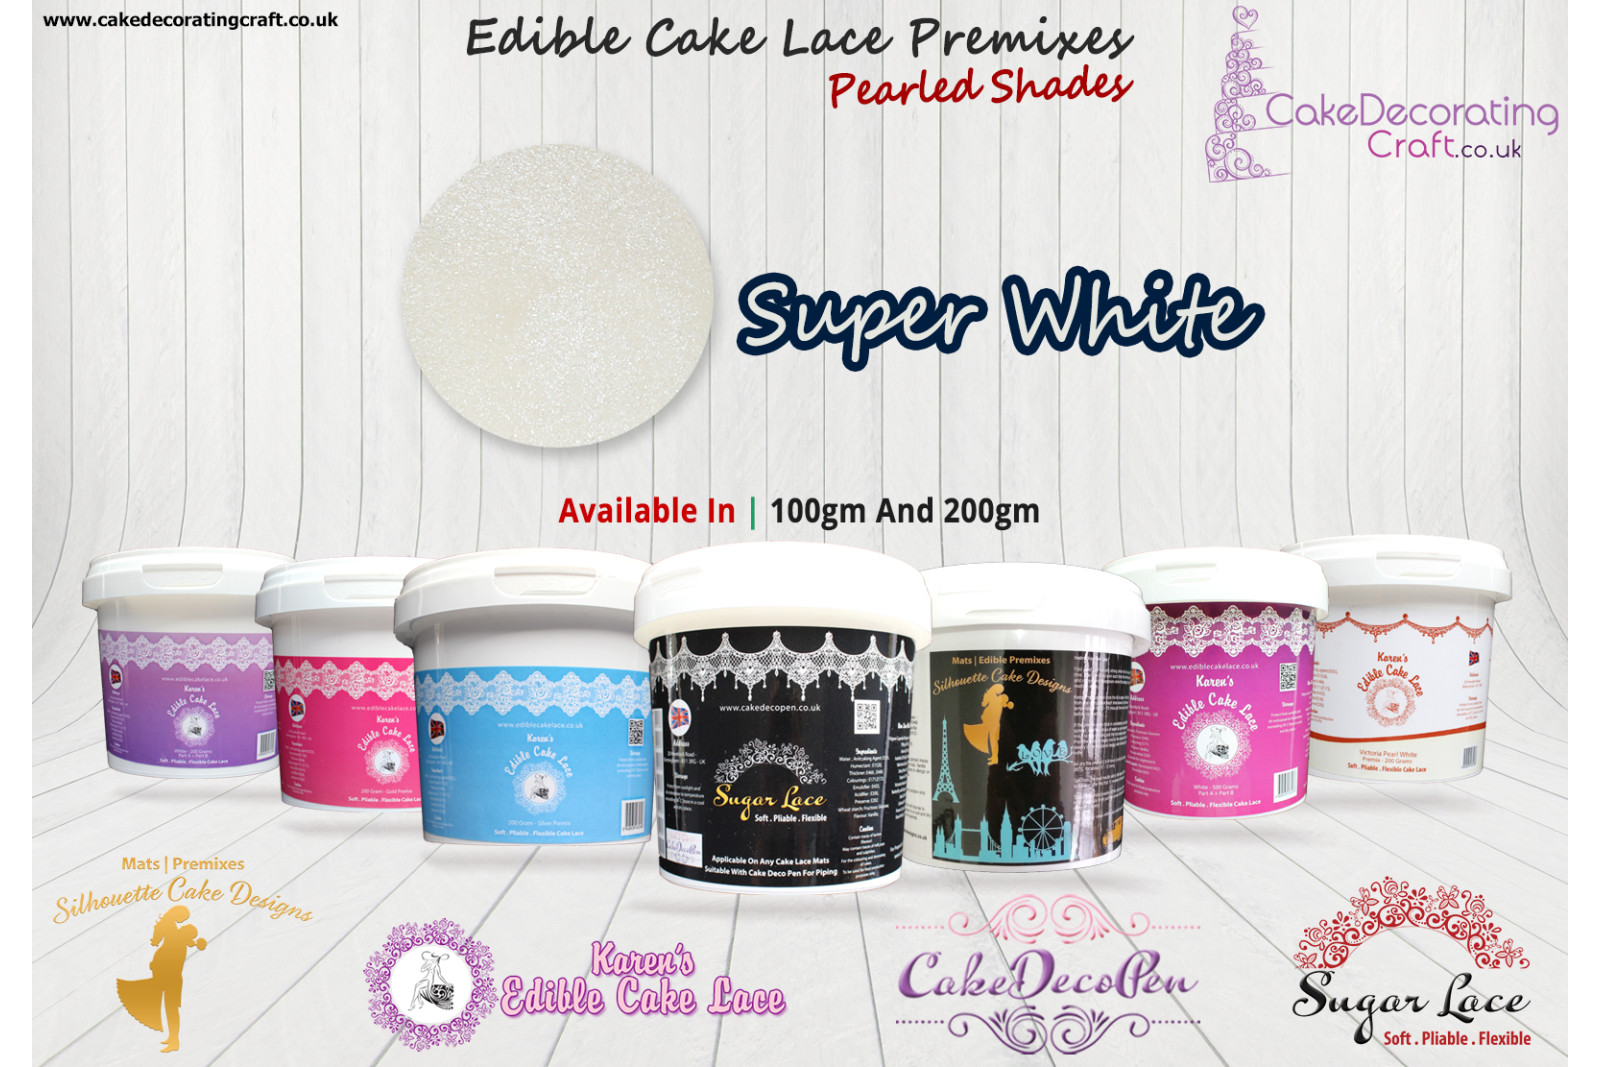 Super White Colour | Silhouette Cake Design Premixes | Pearled Shade | 200 Grams